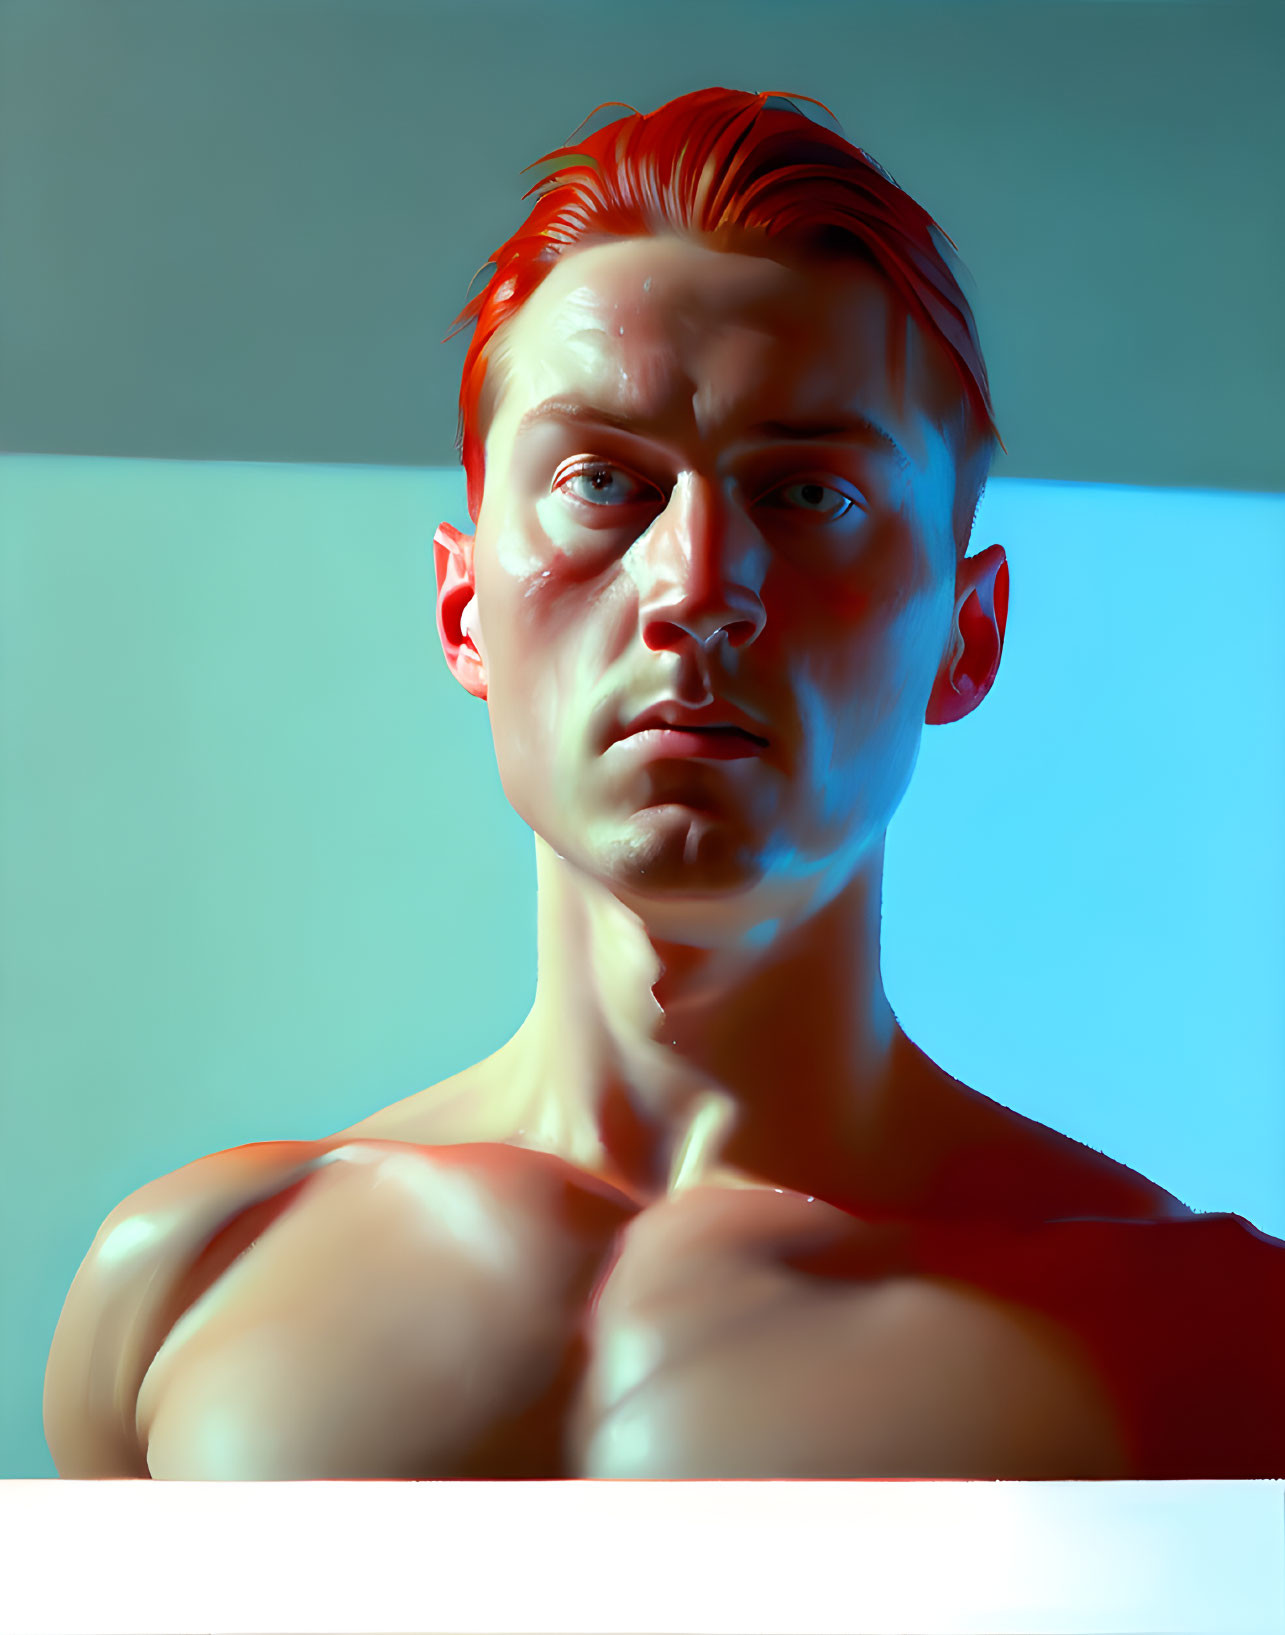 Digital artwork: Stern man with red hair and fair skin